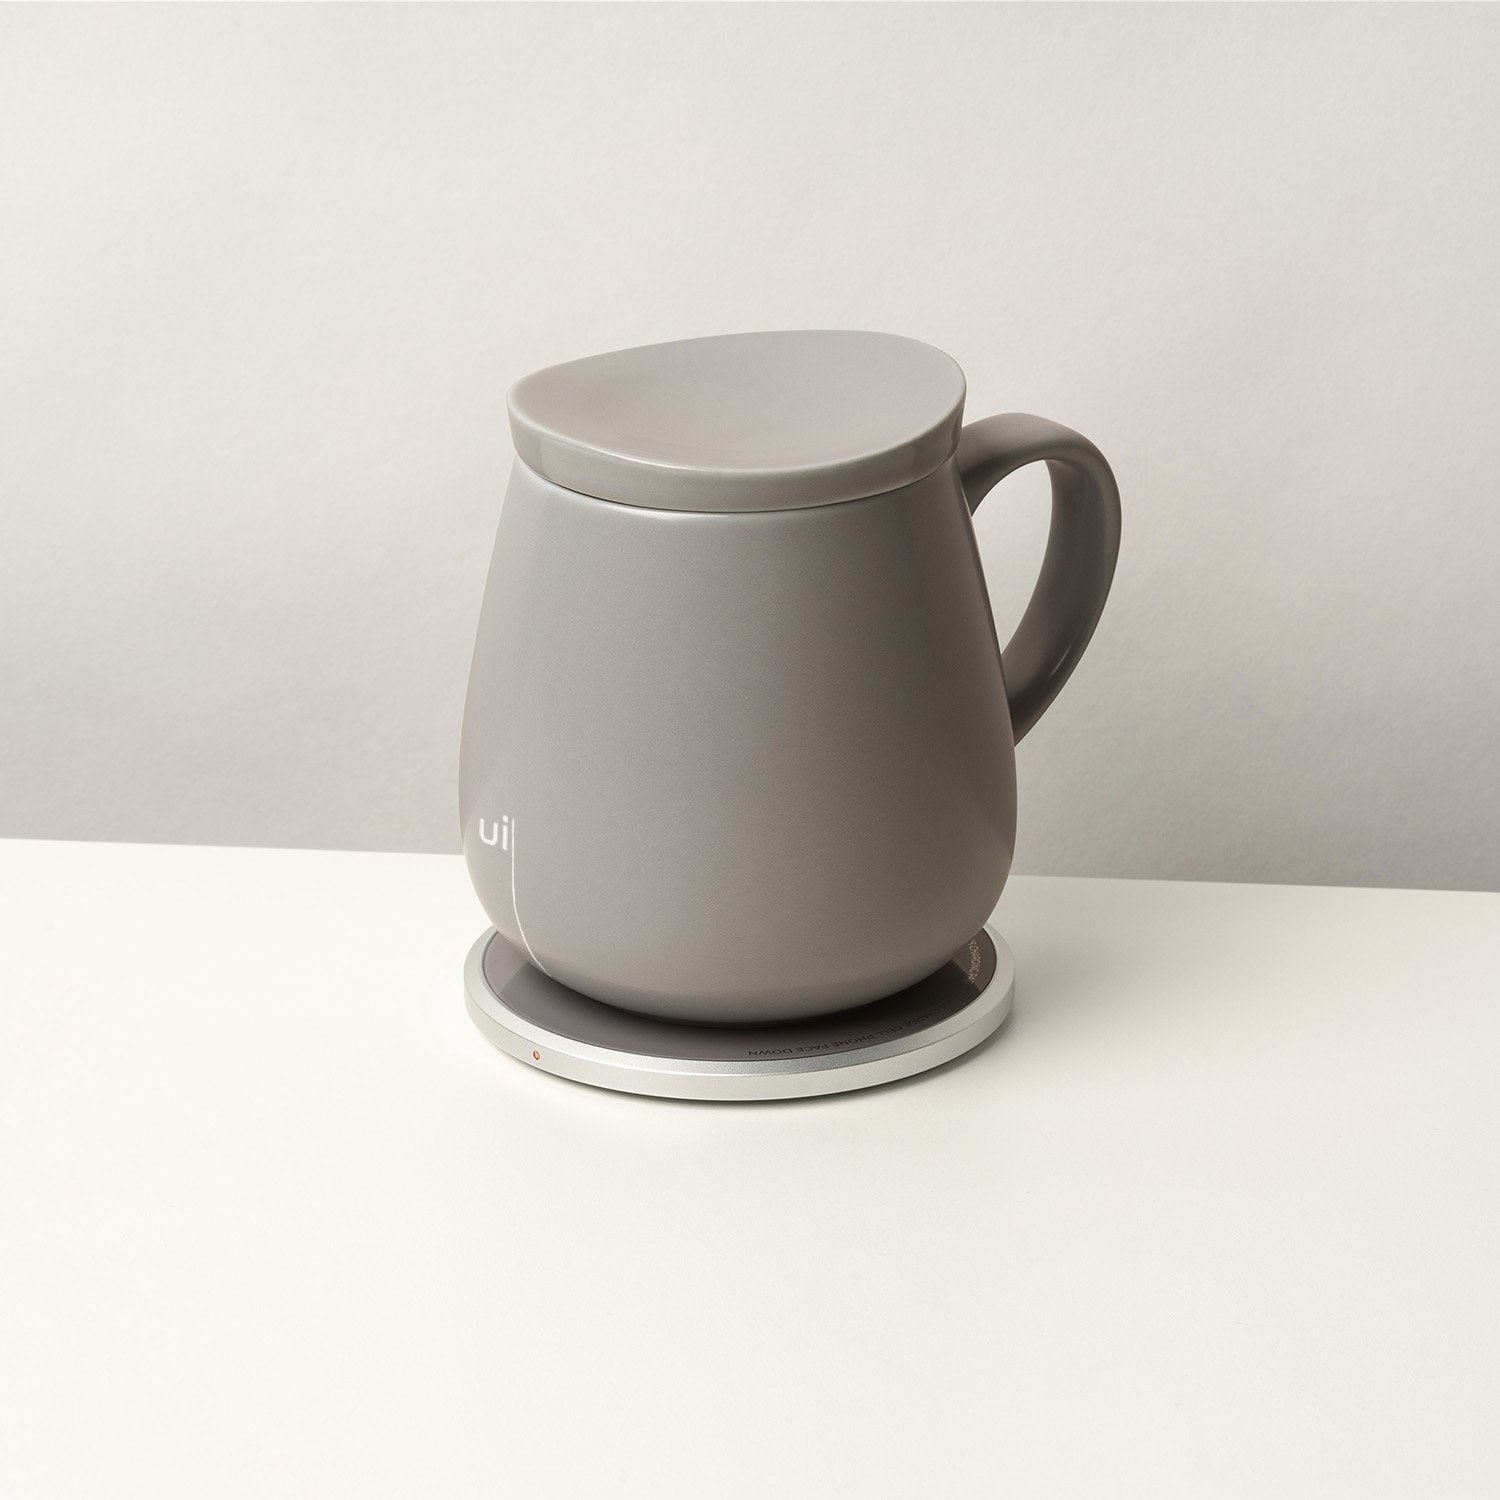 Ui Plus - Self-heating Mug Set - Stone Gray